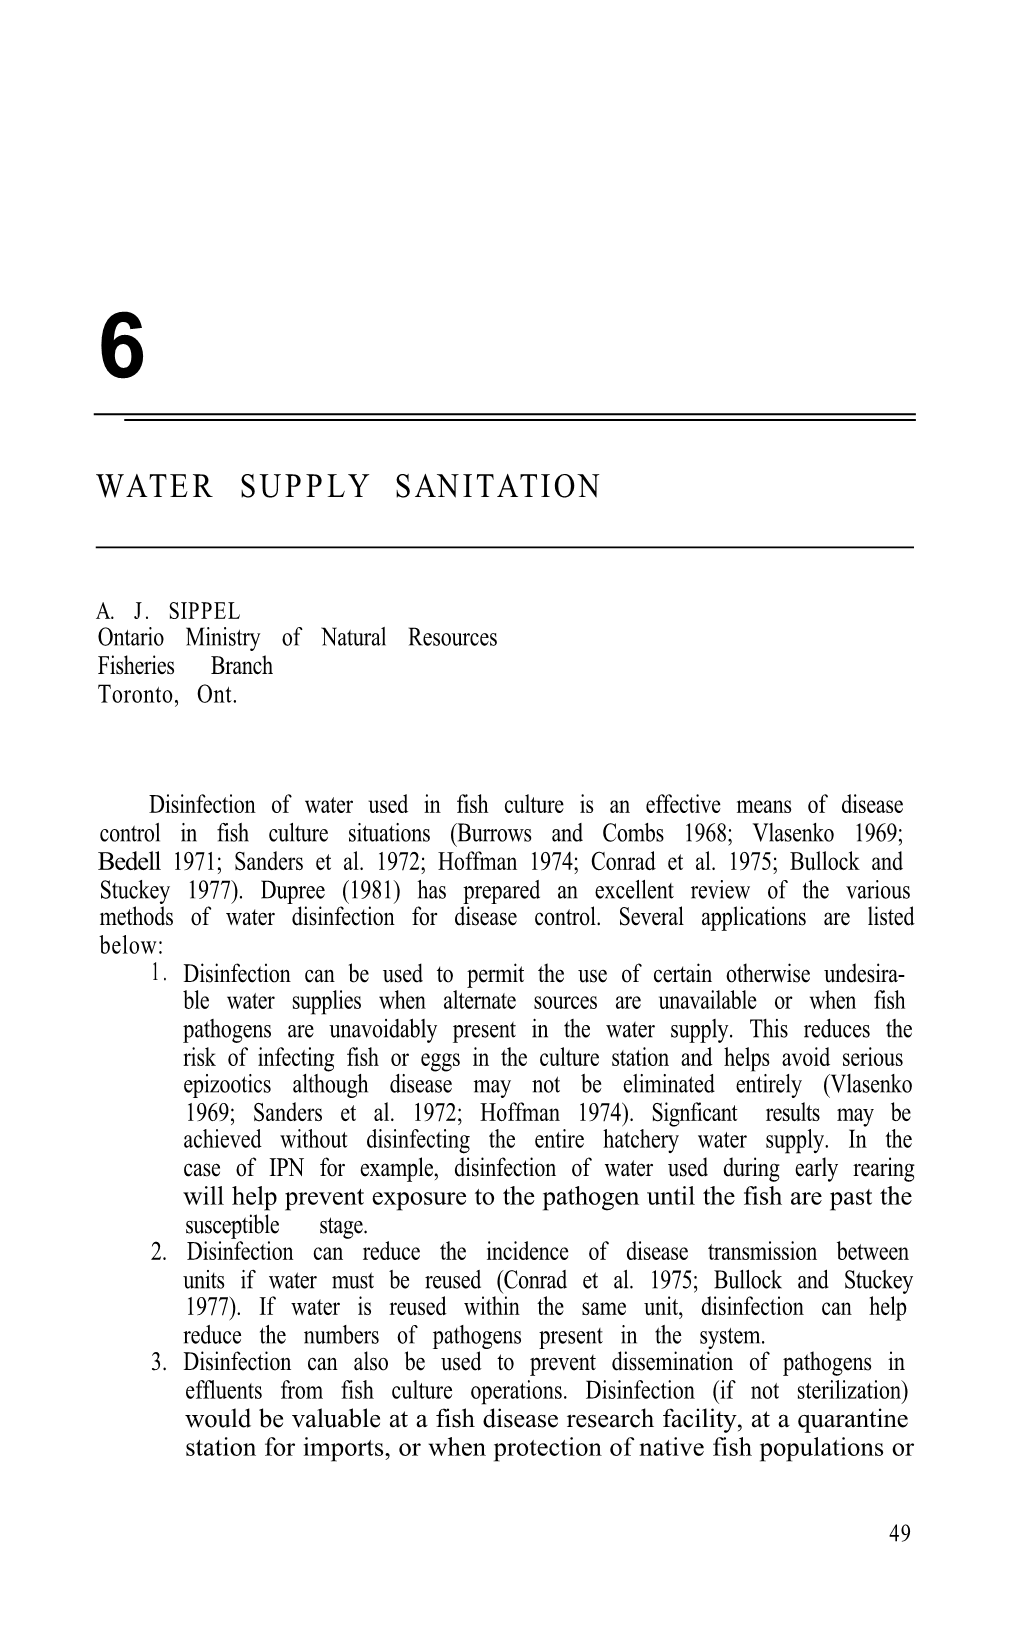 Water Supply Sanitation